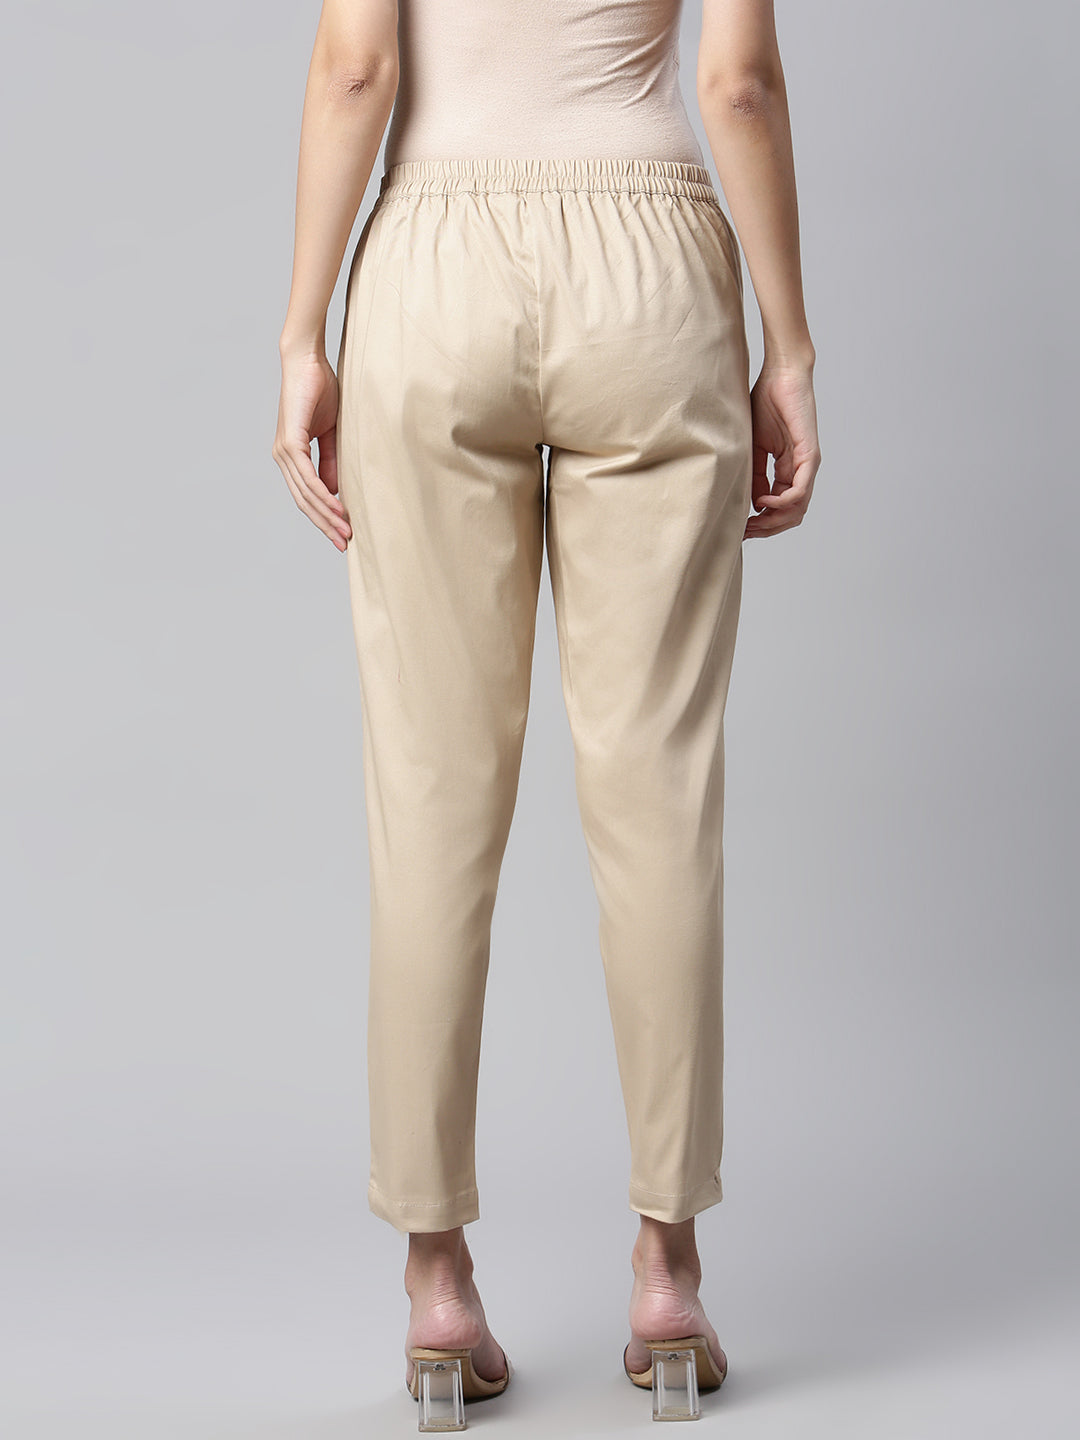 Buy Juniper Beige Cotton Pants for Women Online  Tata CLiQ